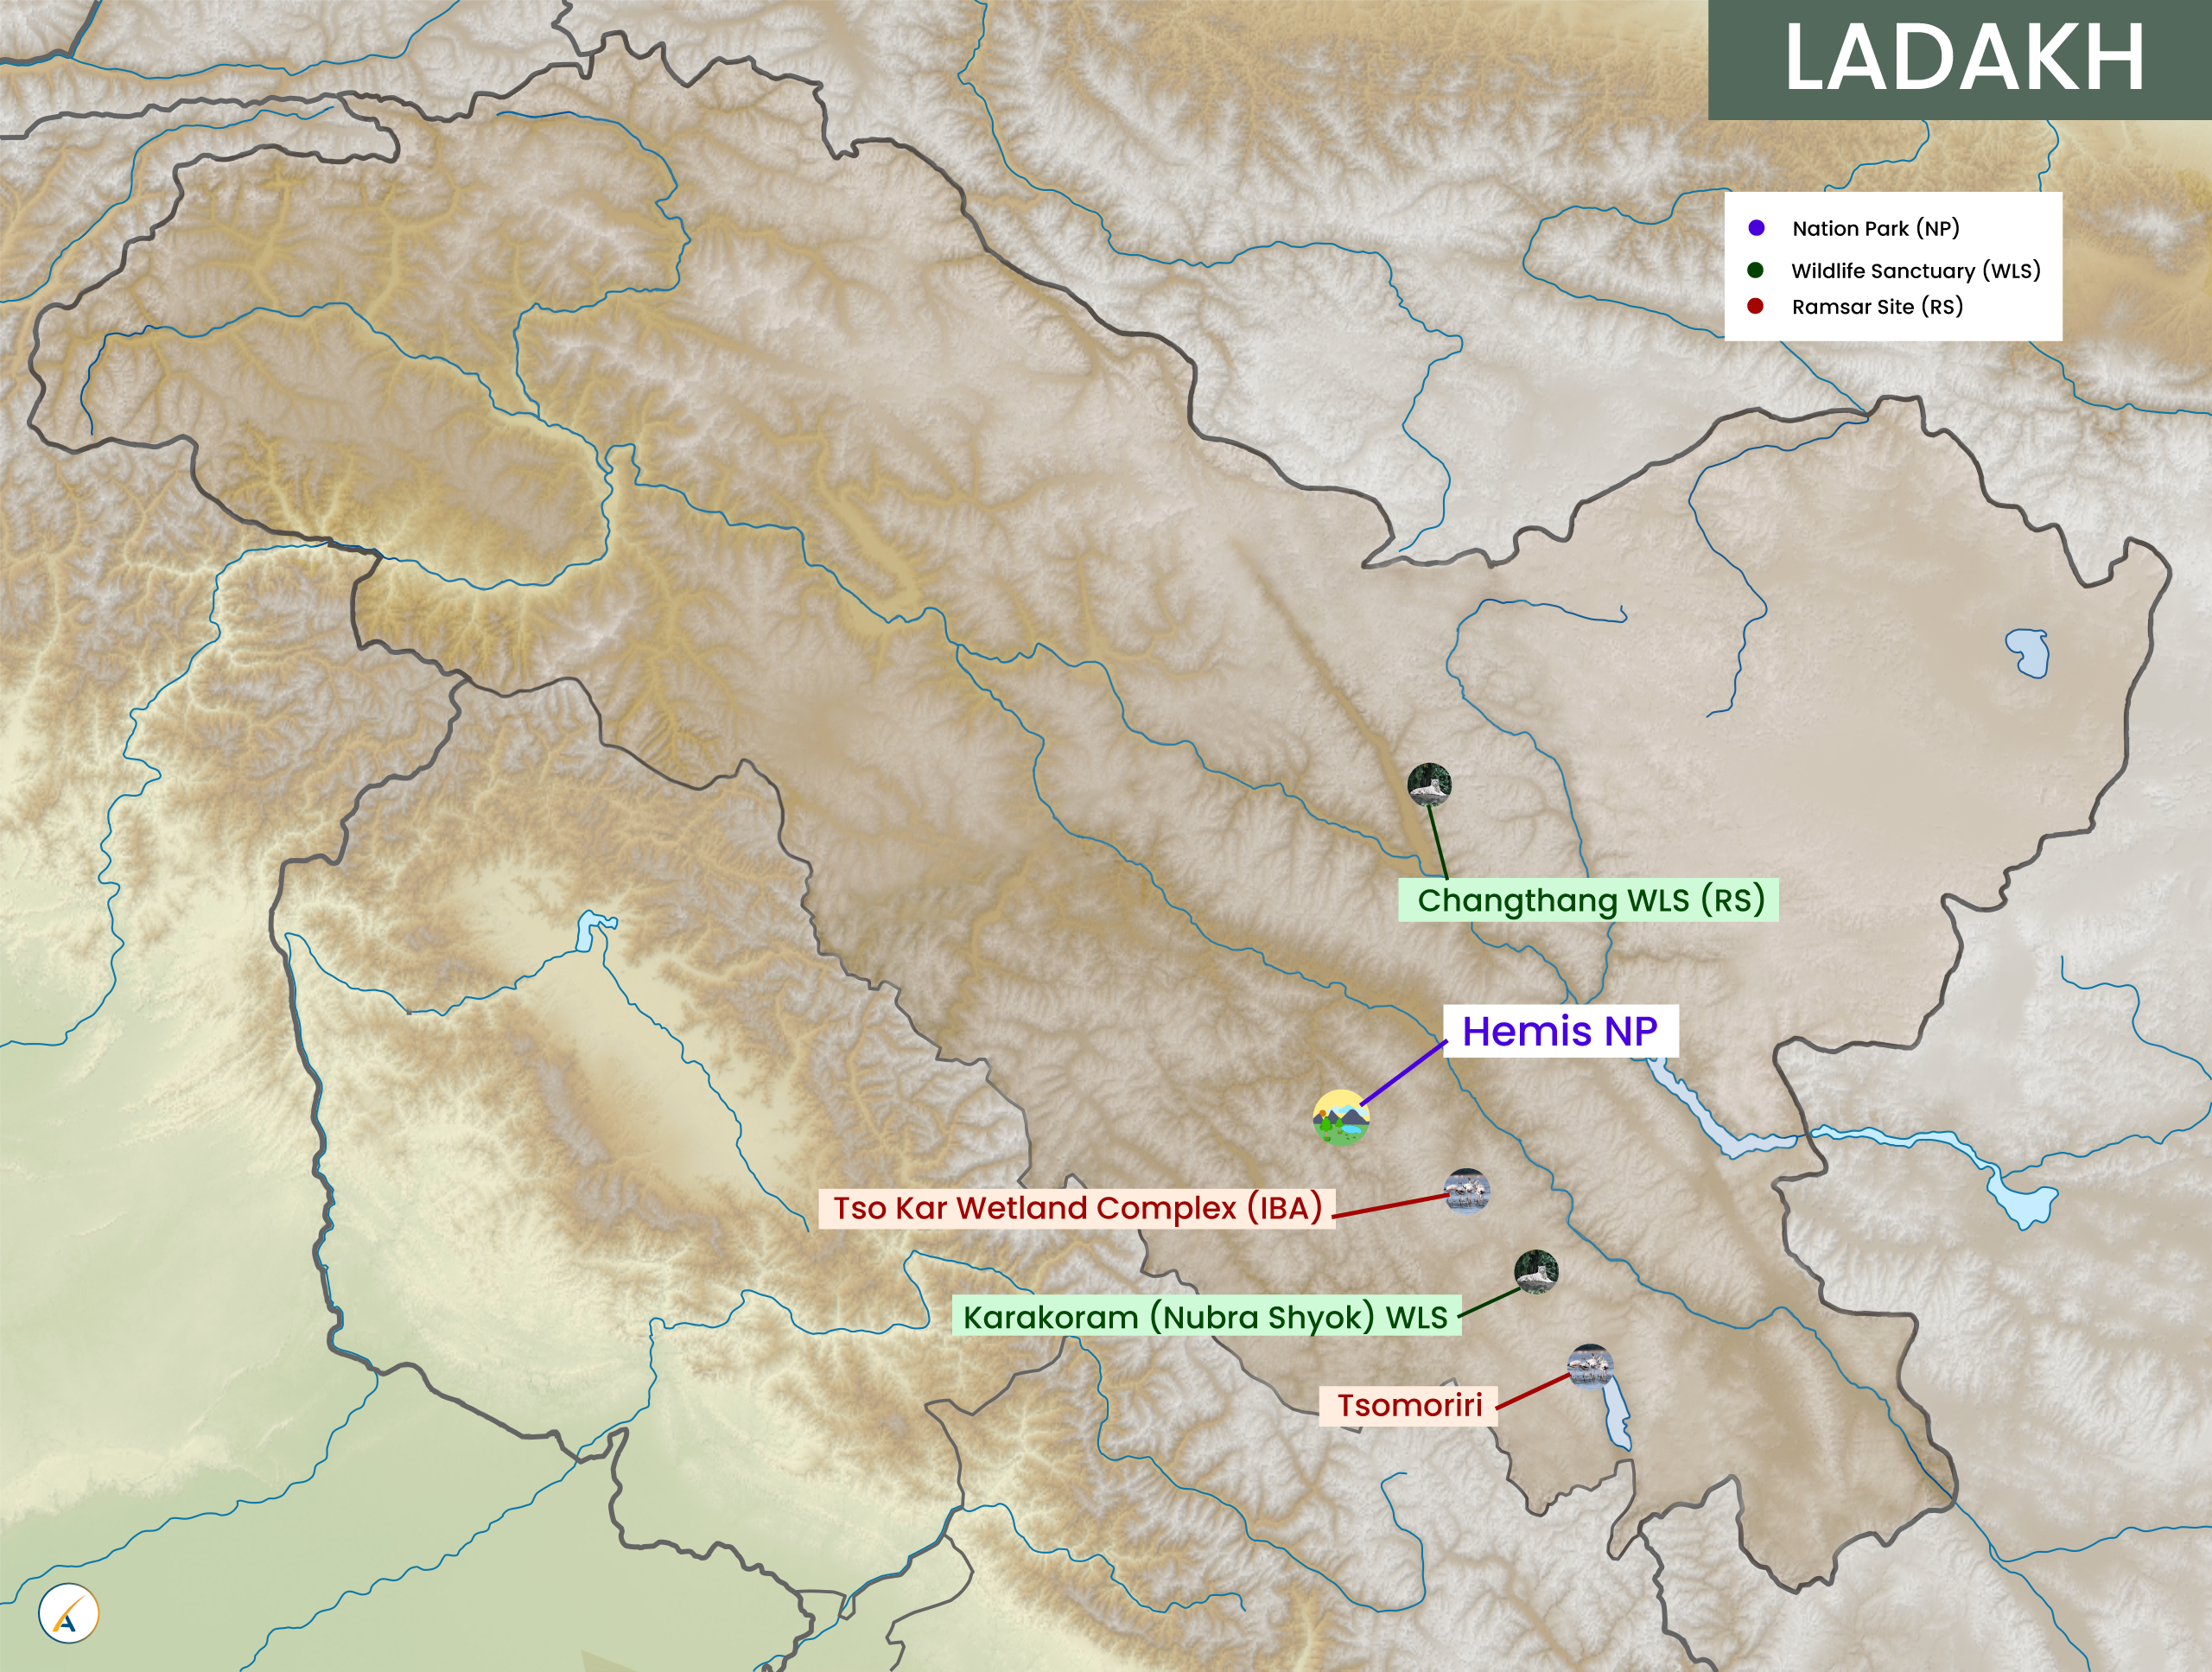 Ladakh National Parks, Wildlife Sanctuaries & Ramsar Sites Map